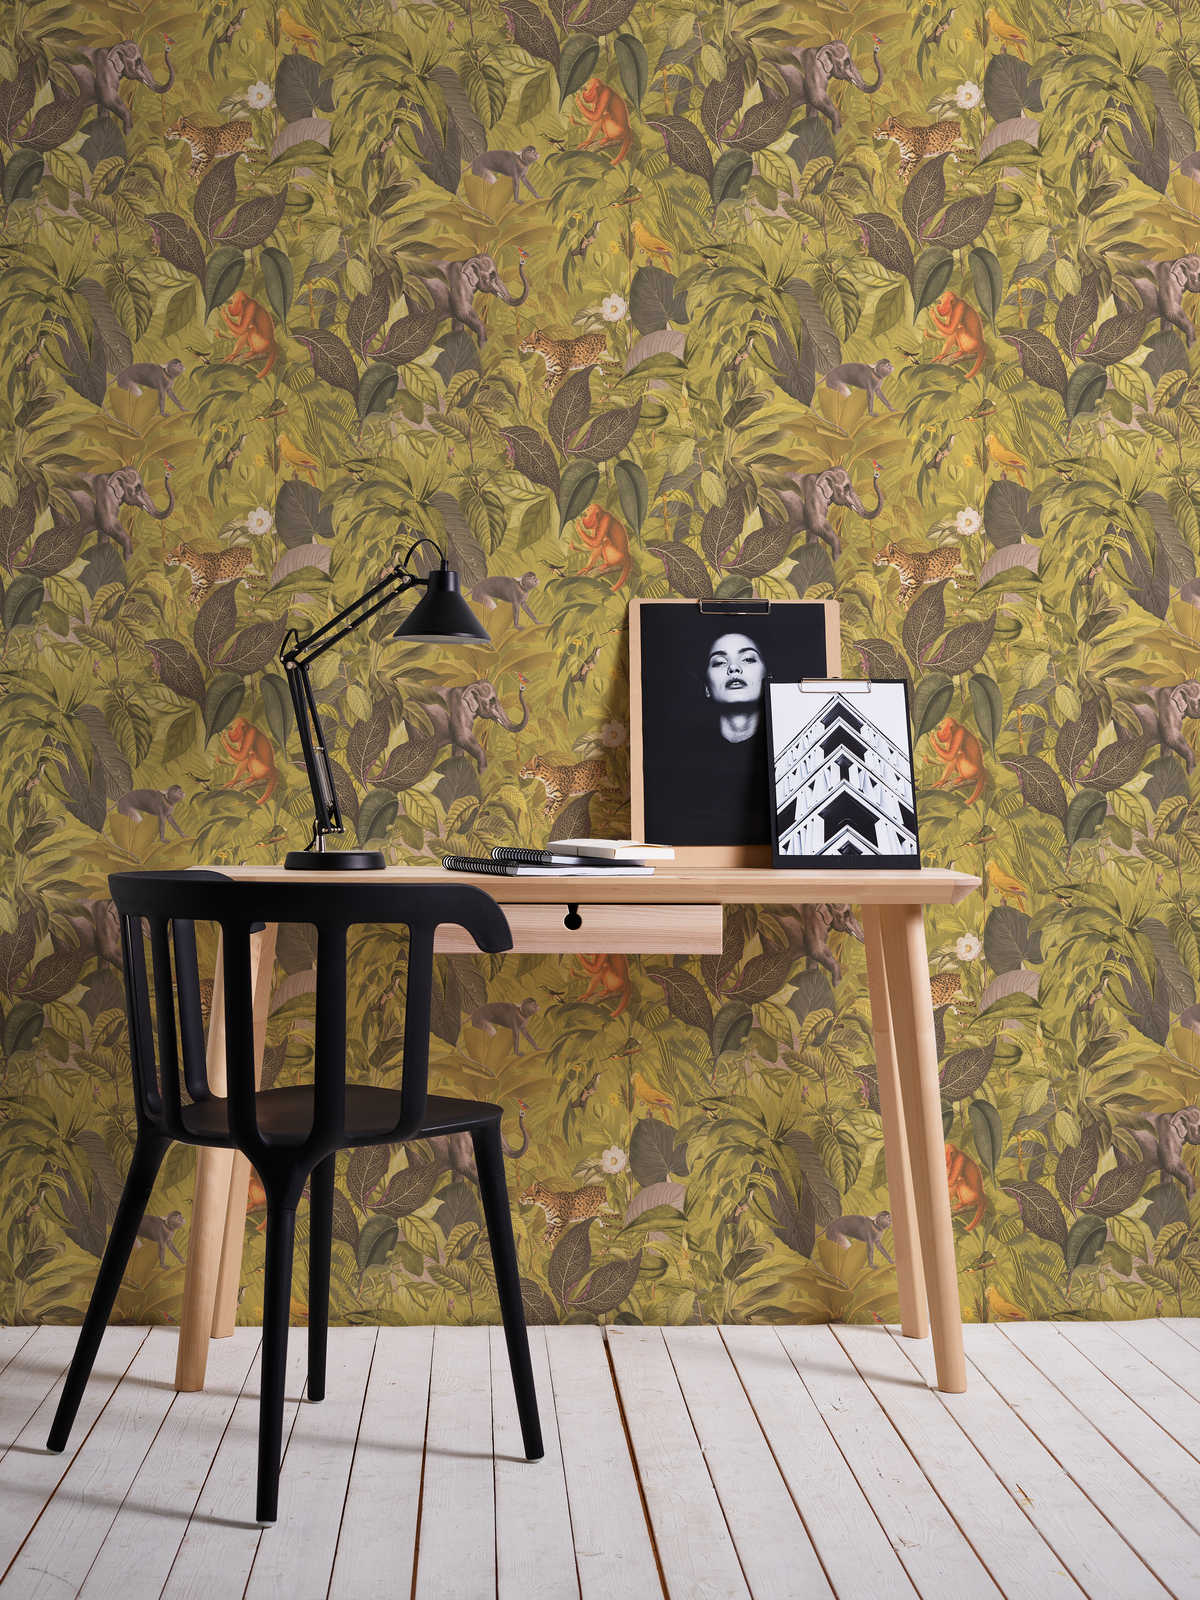             Jungle wallpaper with animals, children's theme - Brown, Green
        